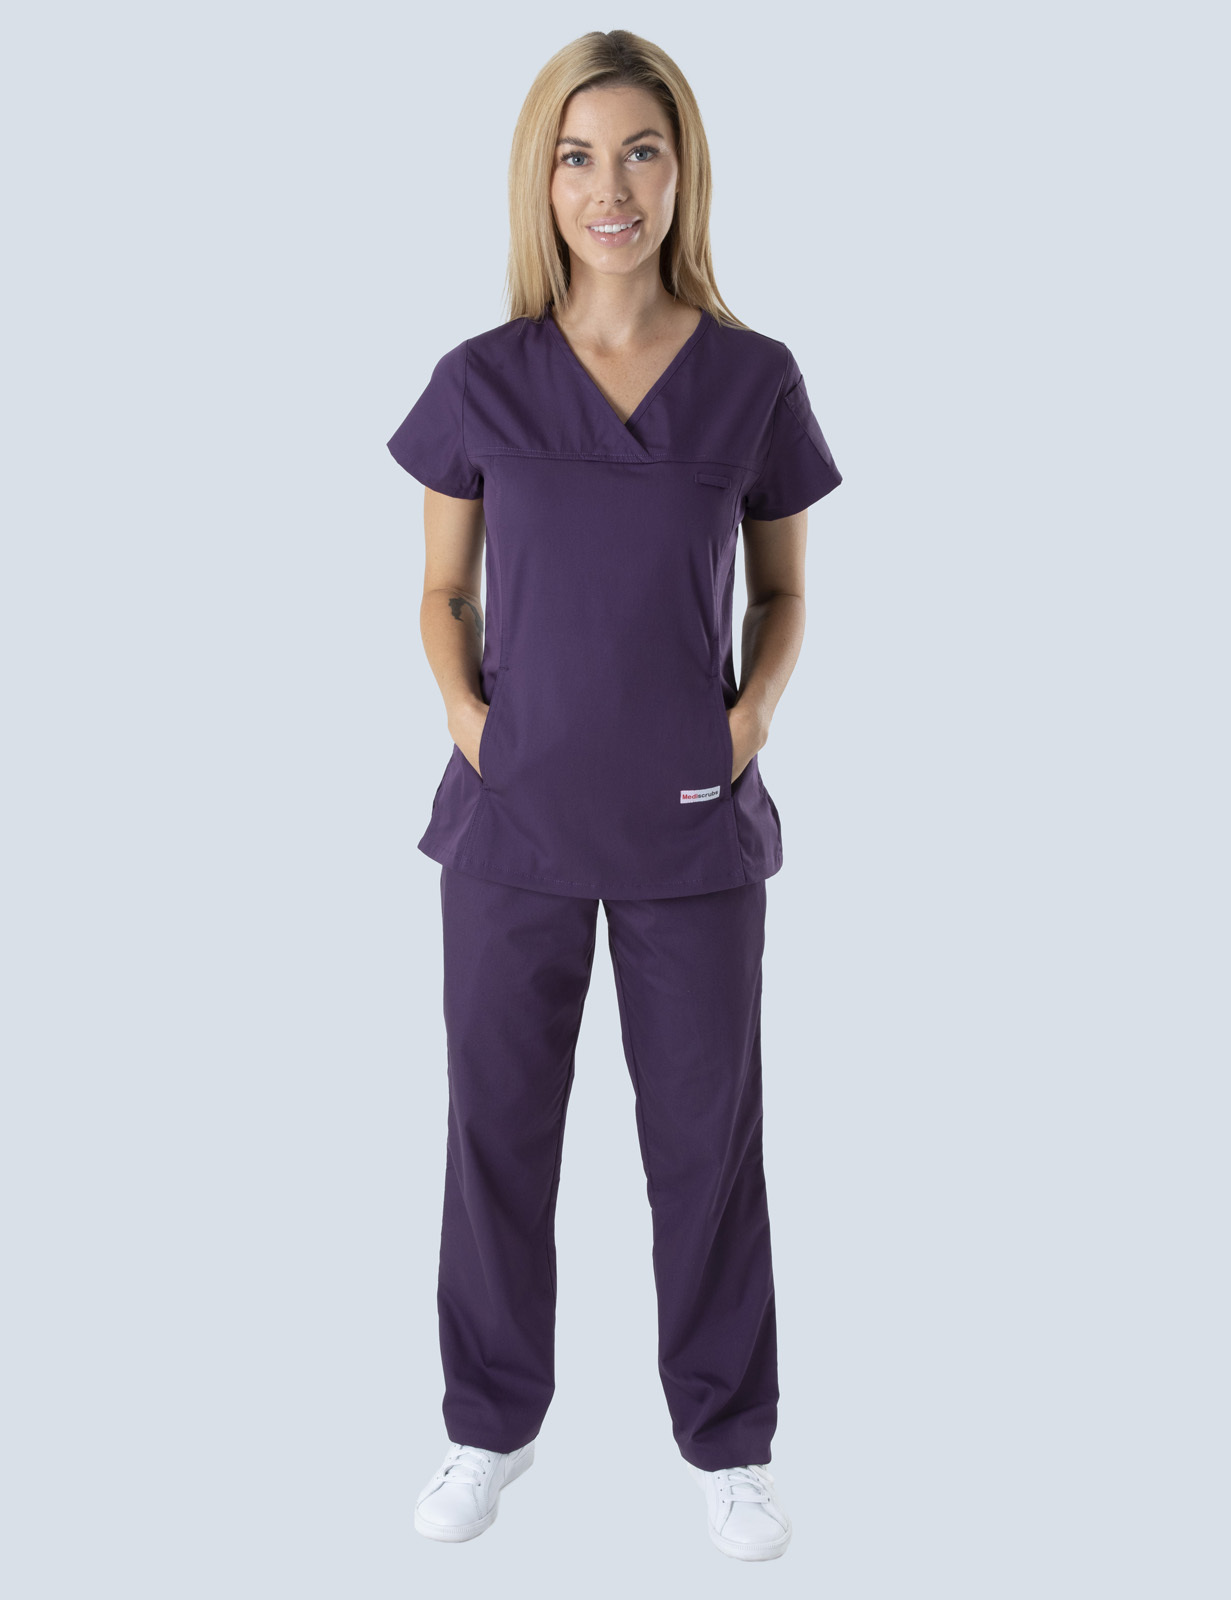 Logan Hospita lSpecial Care Nursery Uniform Set Bundle (Women's Fit Solid Top and Cargo Pants in Aubergine incl Logo)